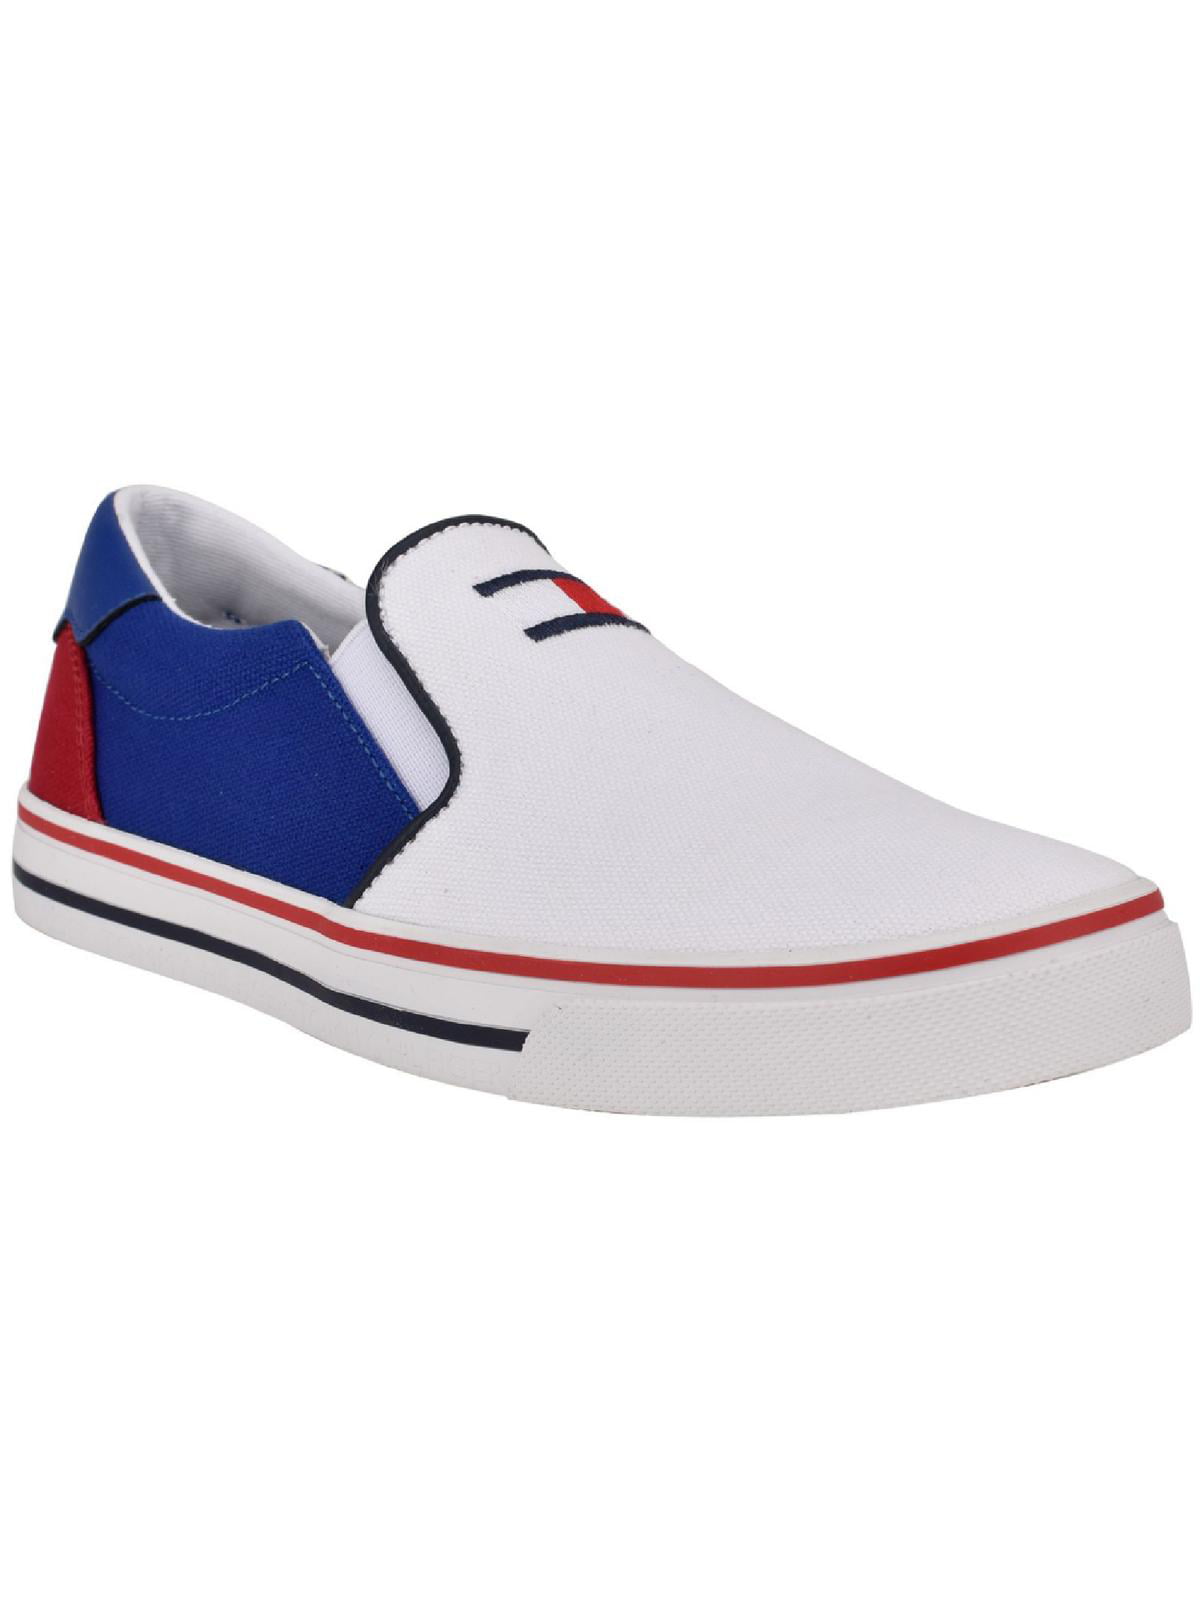 Tommy Hilfiger Womens Oaklyn 3 Canvas Slip-On Sneakers White 6.5 Medium - Walmart.com